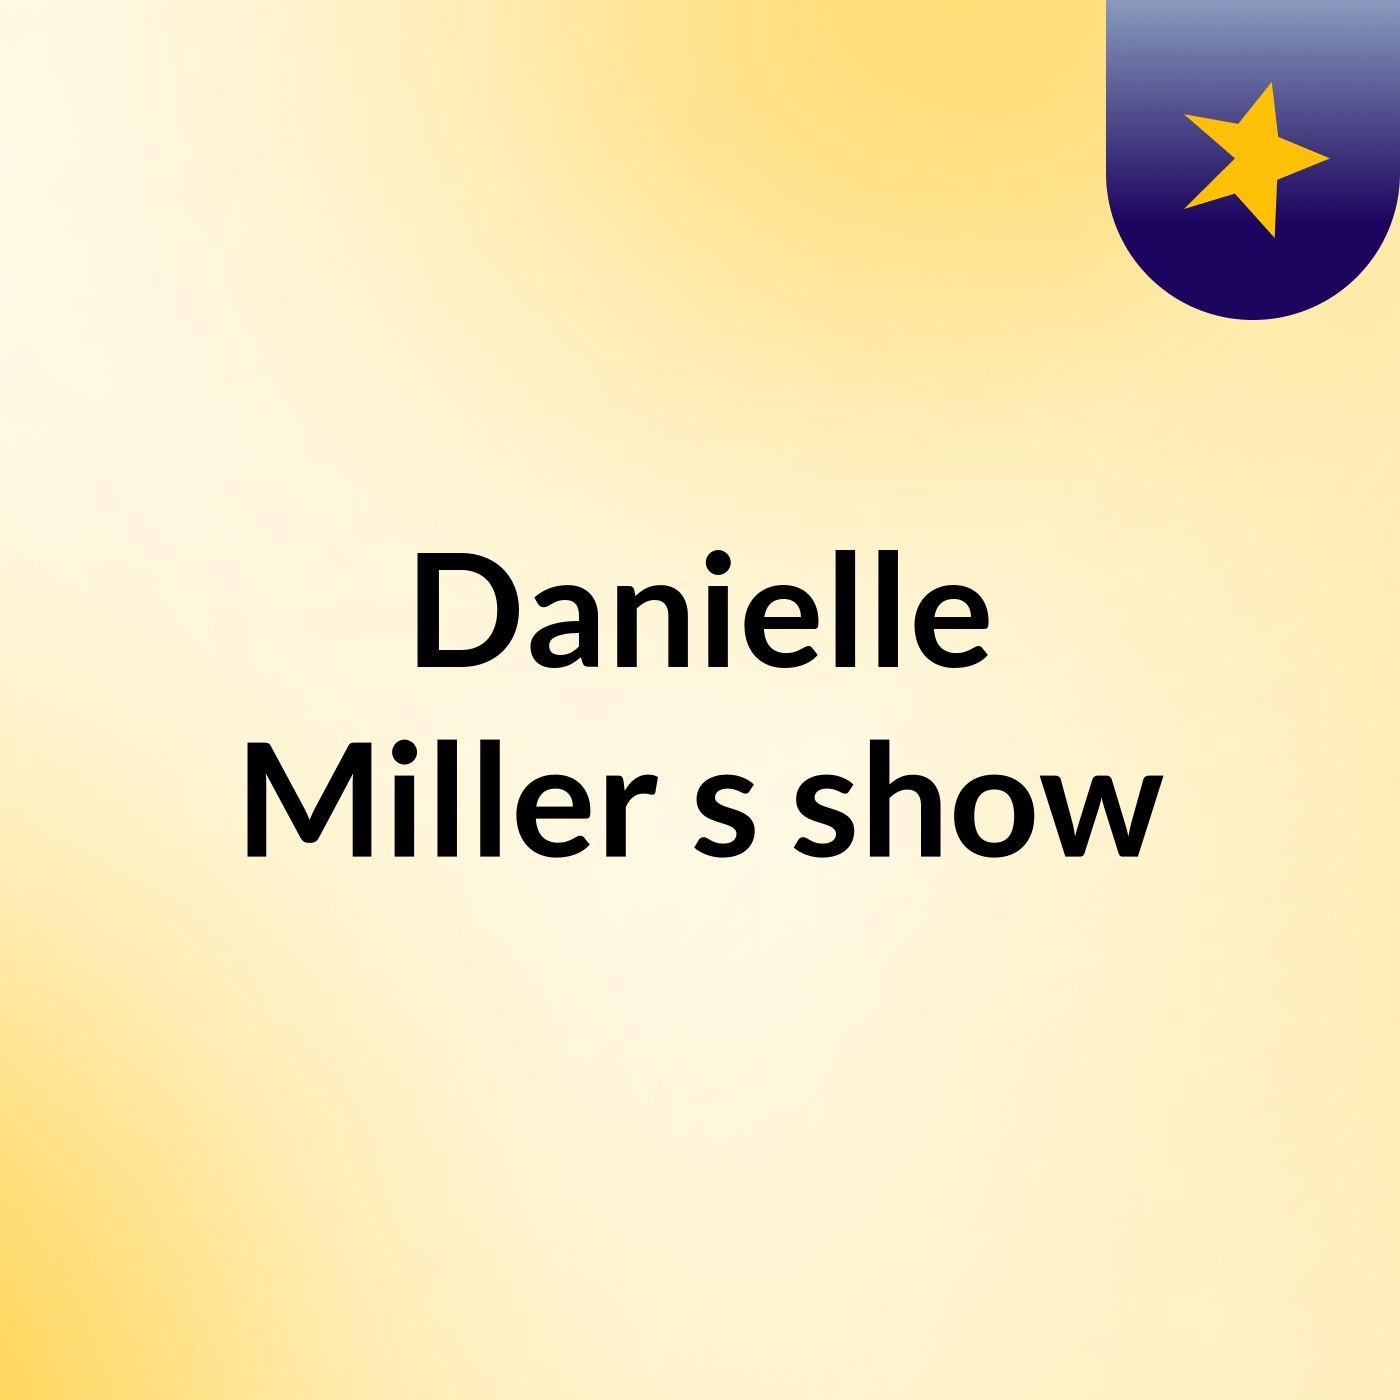 Episode 4 - Danielle Miller's show